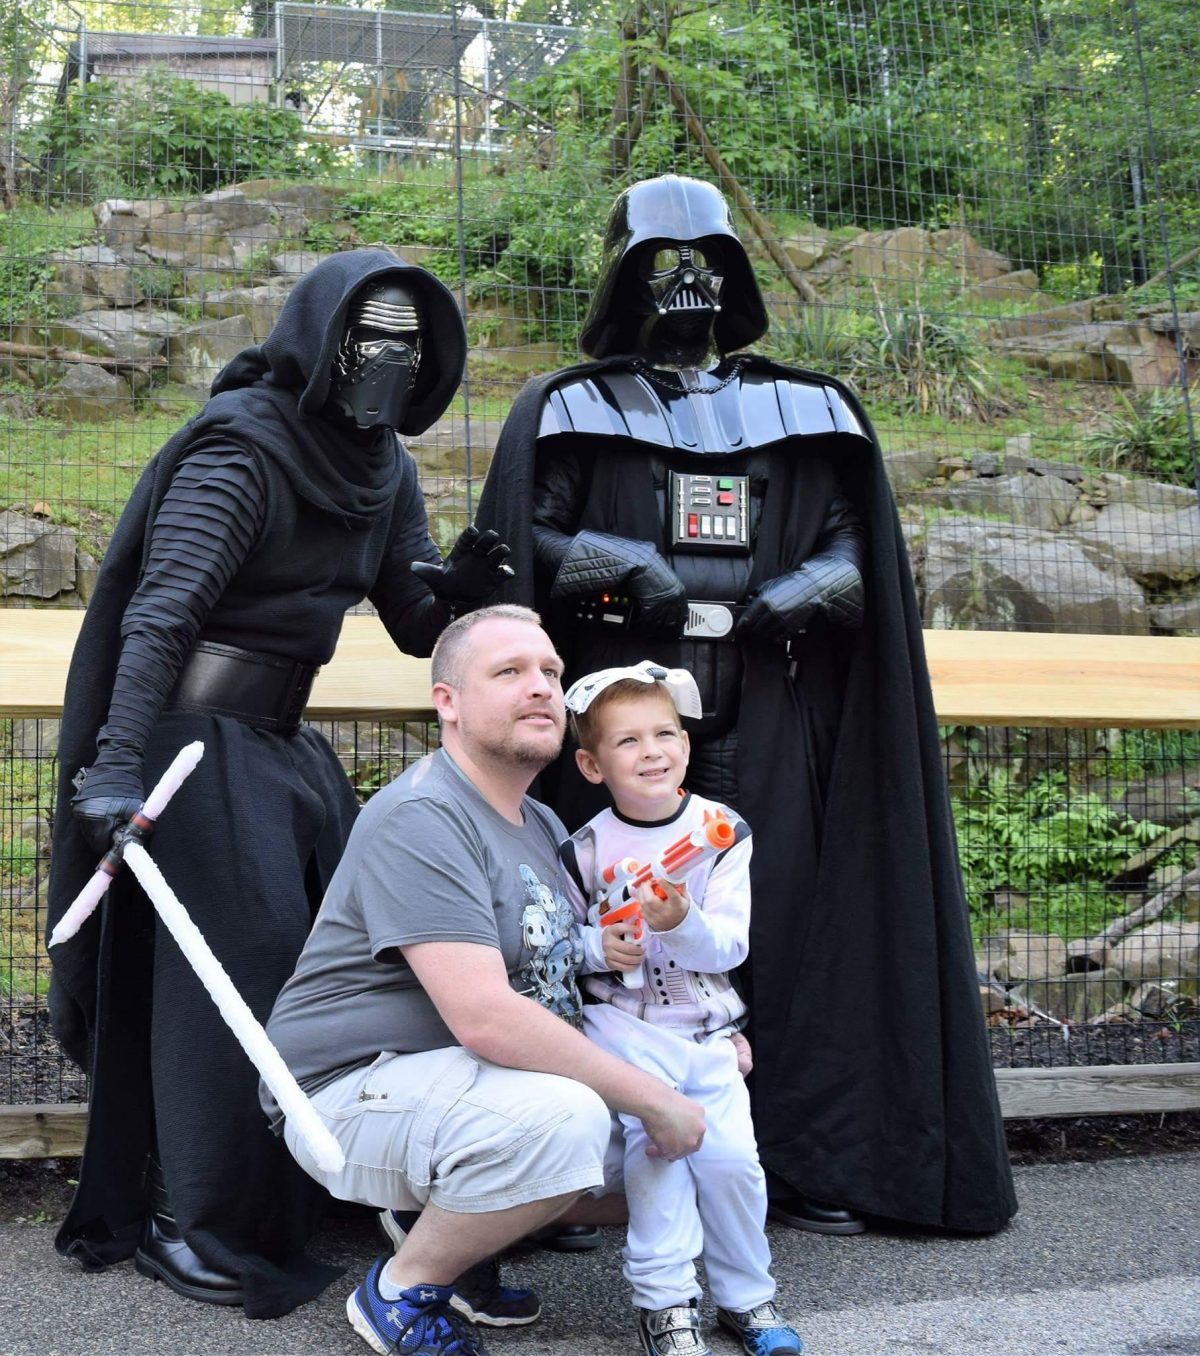 Star Wars Day at Brandywine Zoo